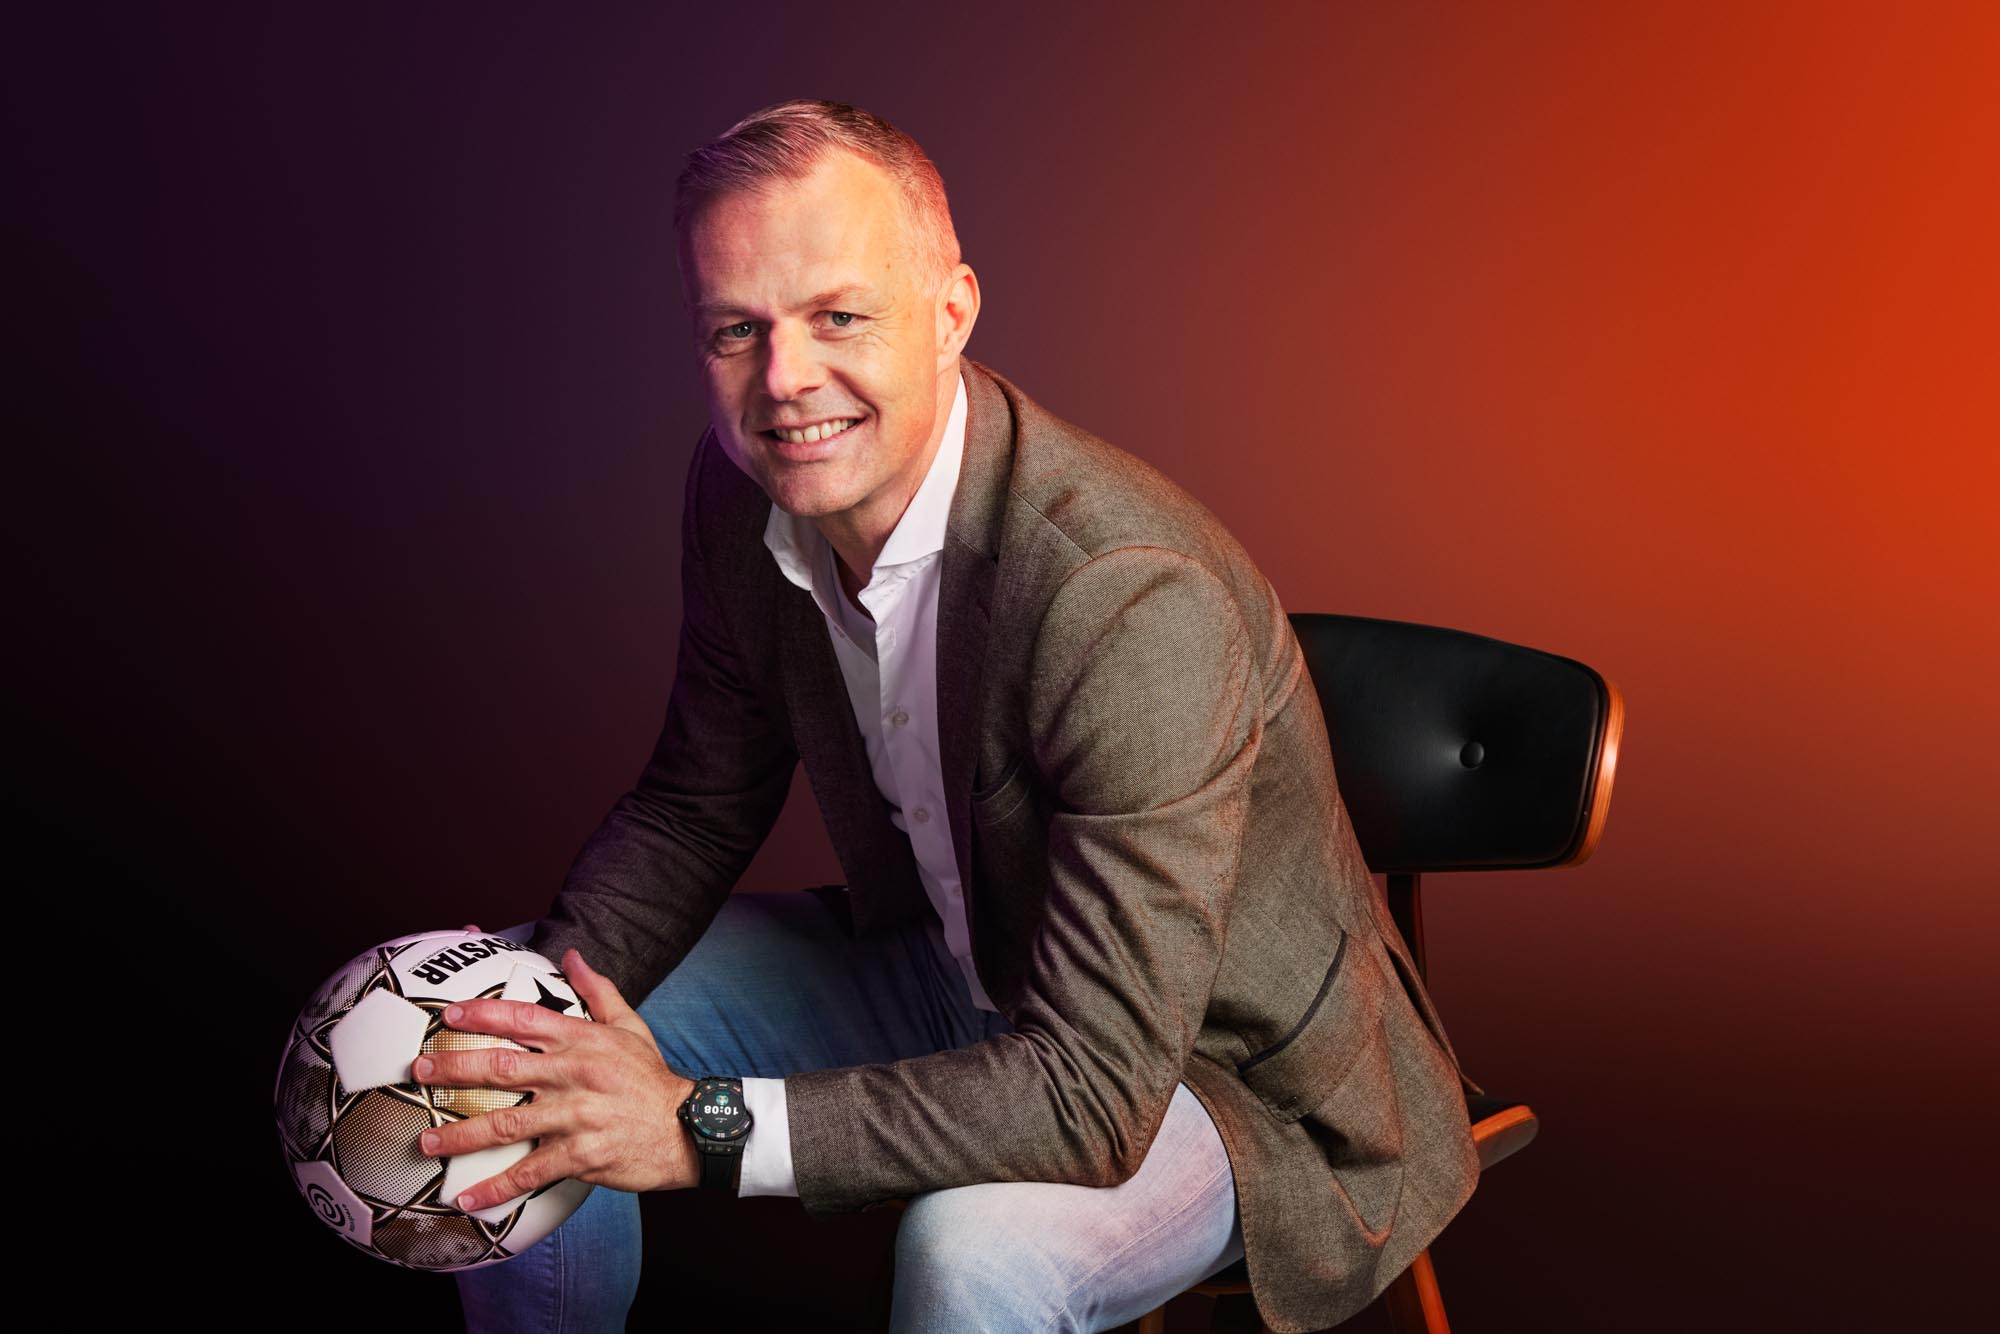 Bjorn Kuipers wearing the Hublot Big Bang e UEFA EURO 2020